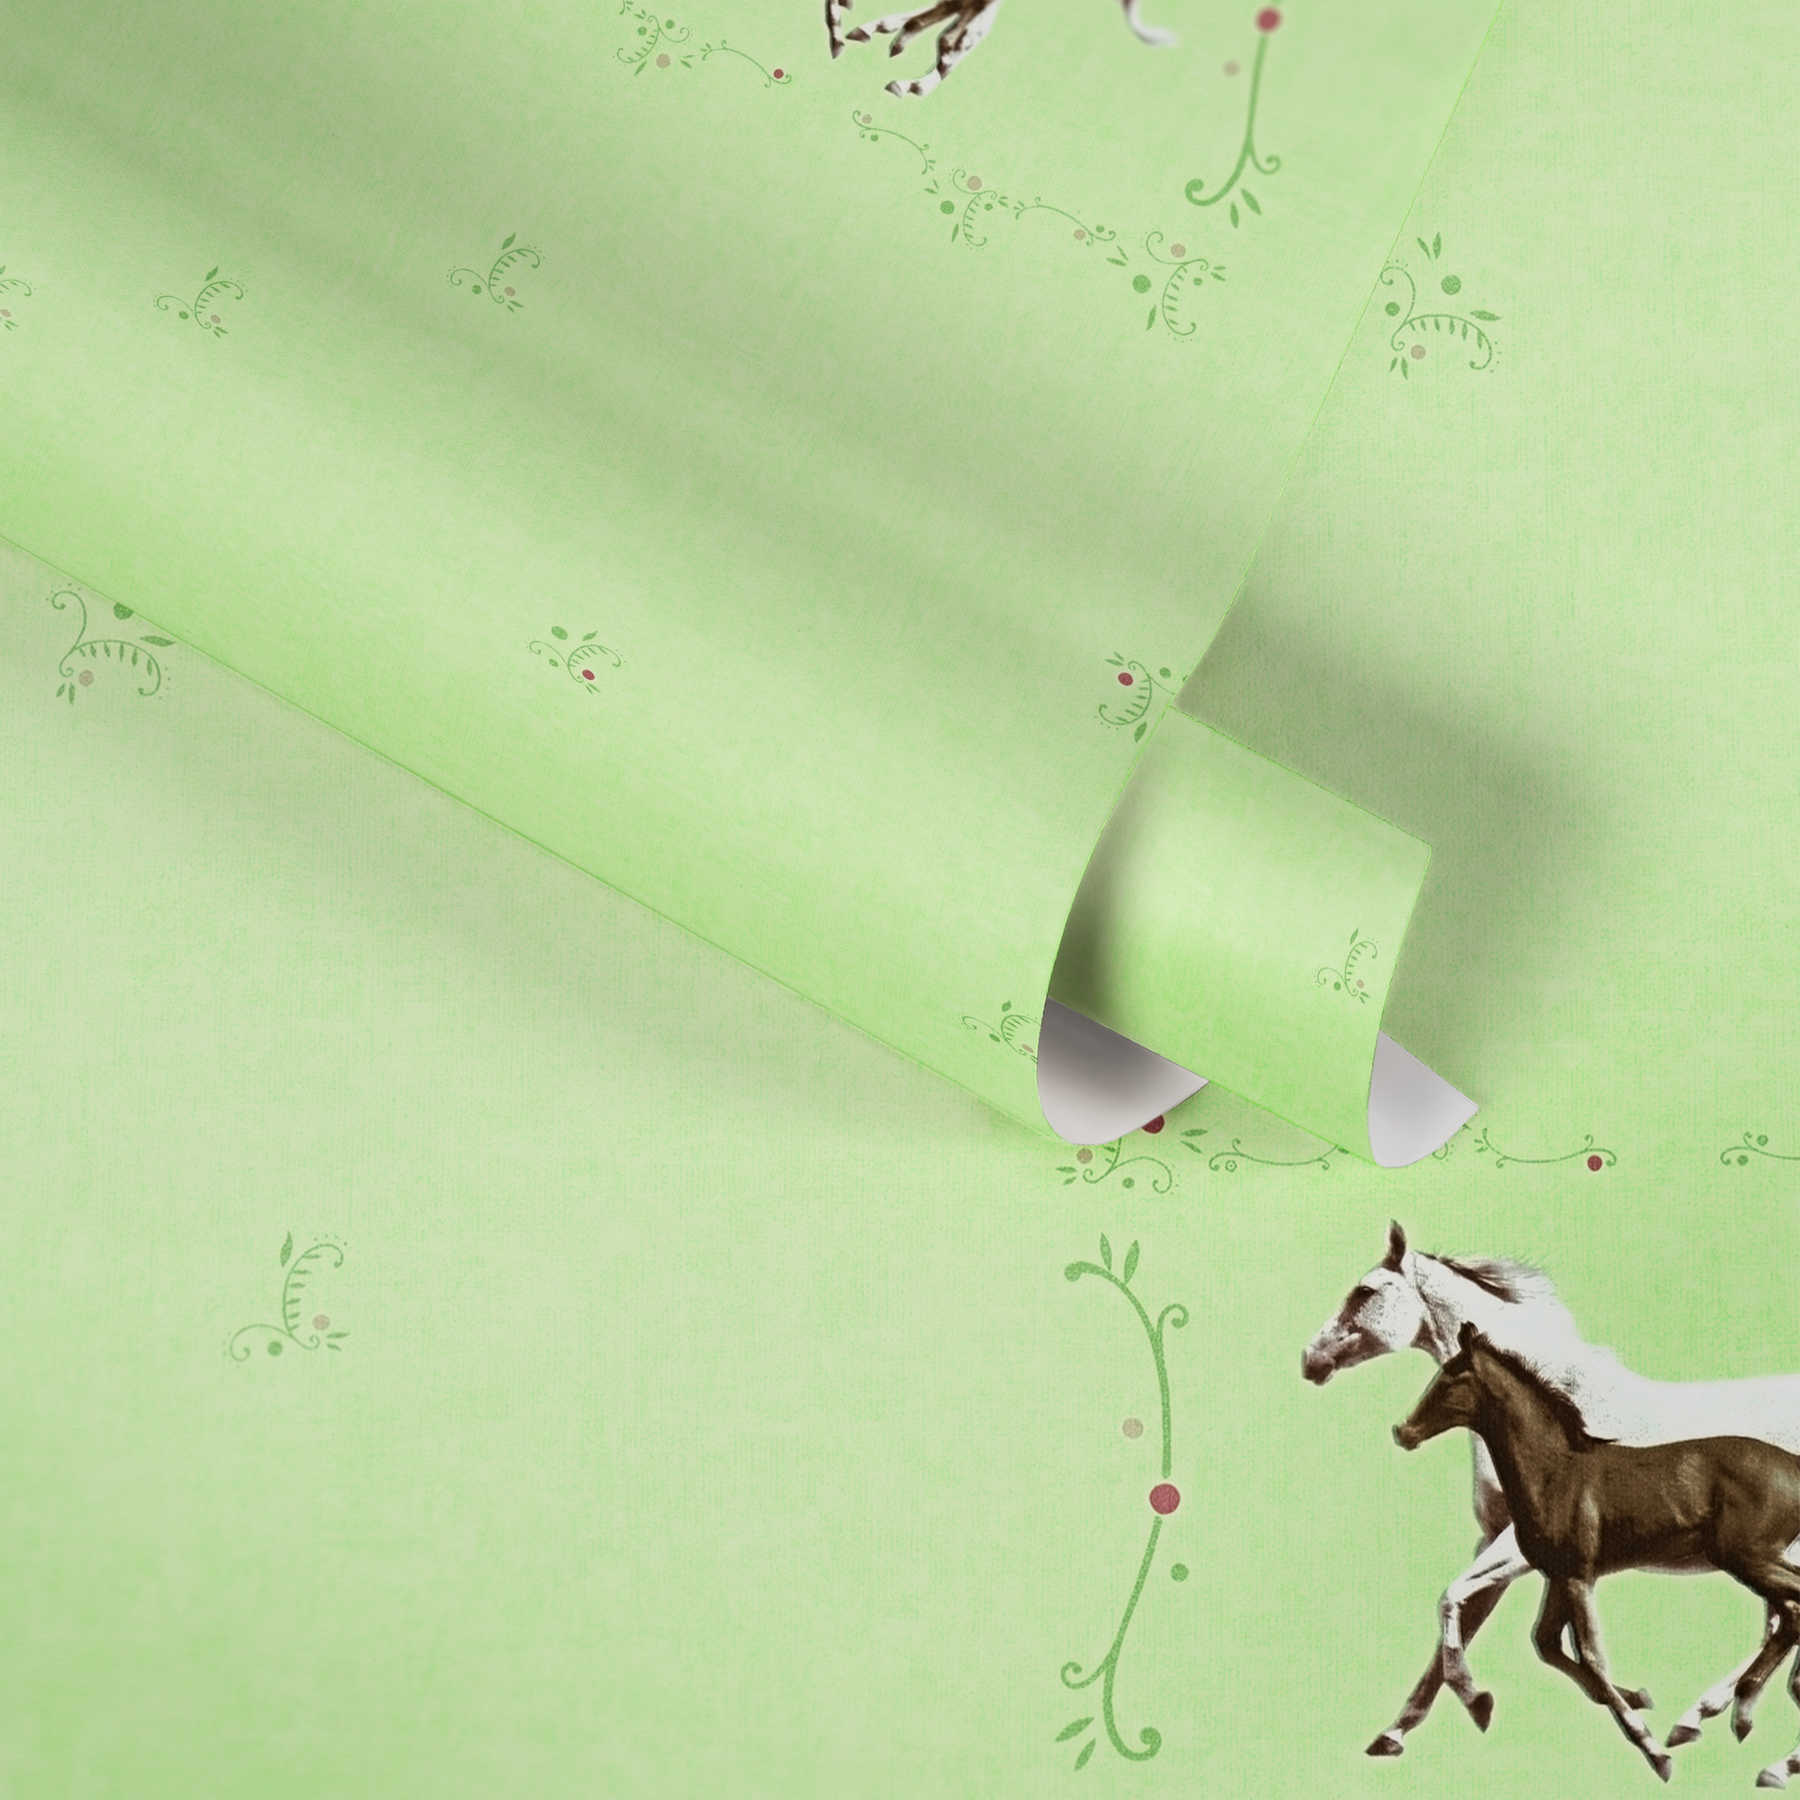             Horses wallpaper with pfoles & decorative pattern - green
        